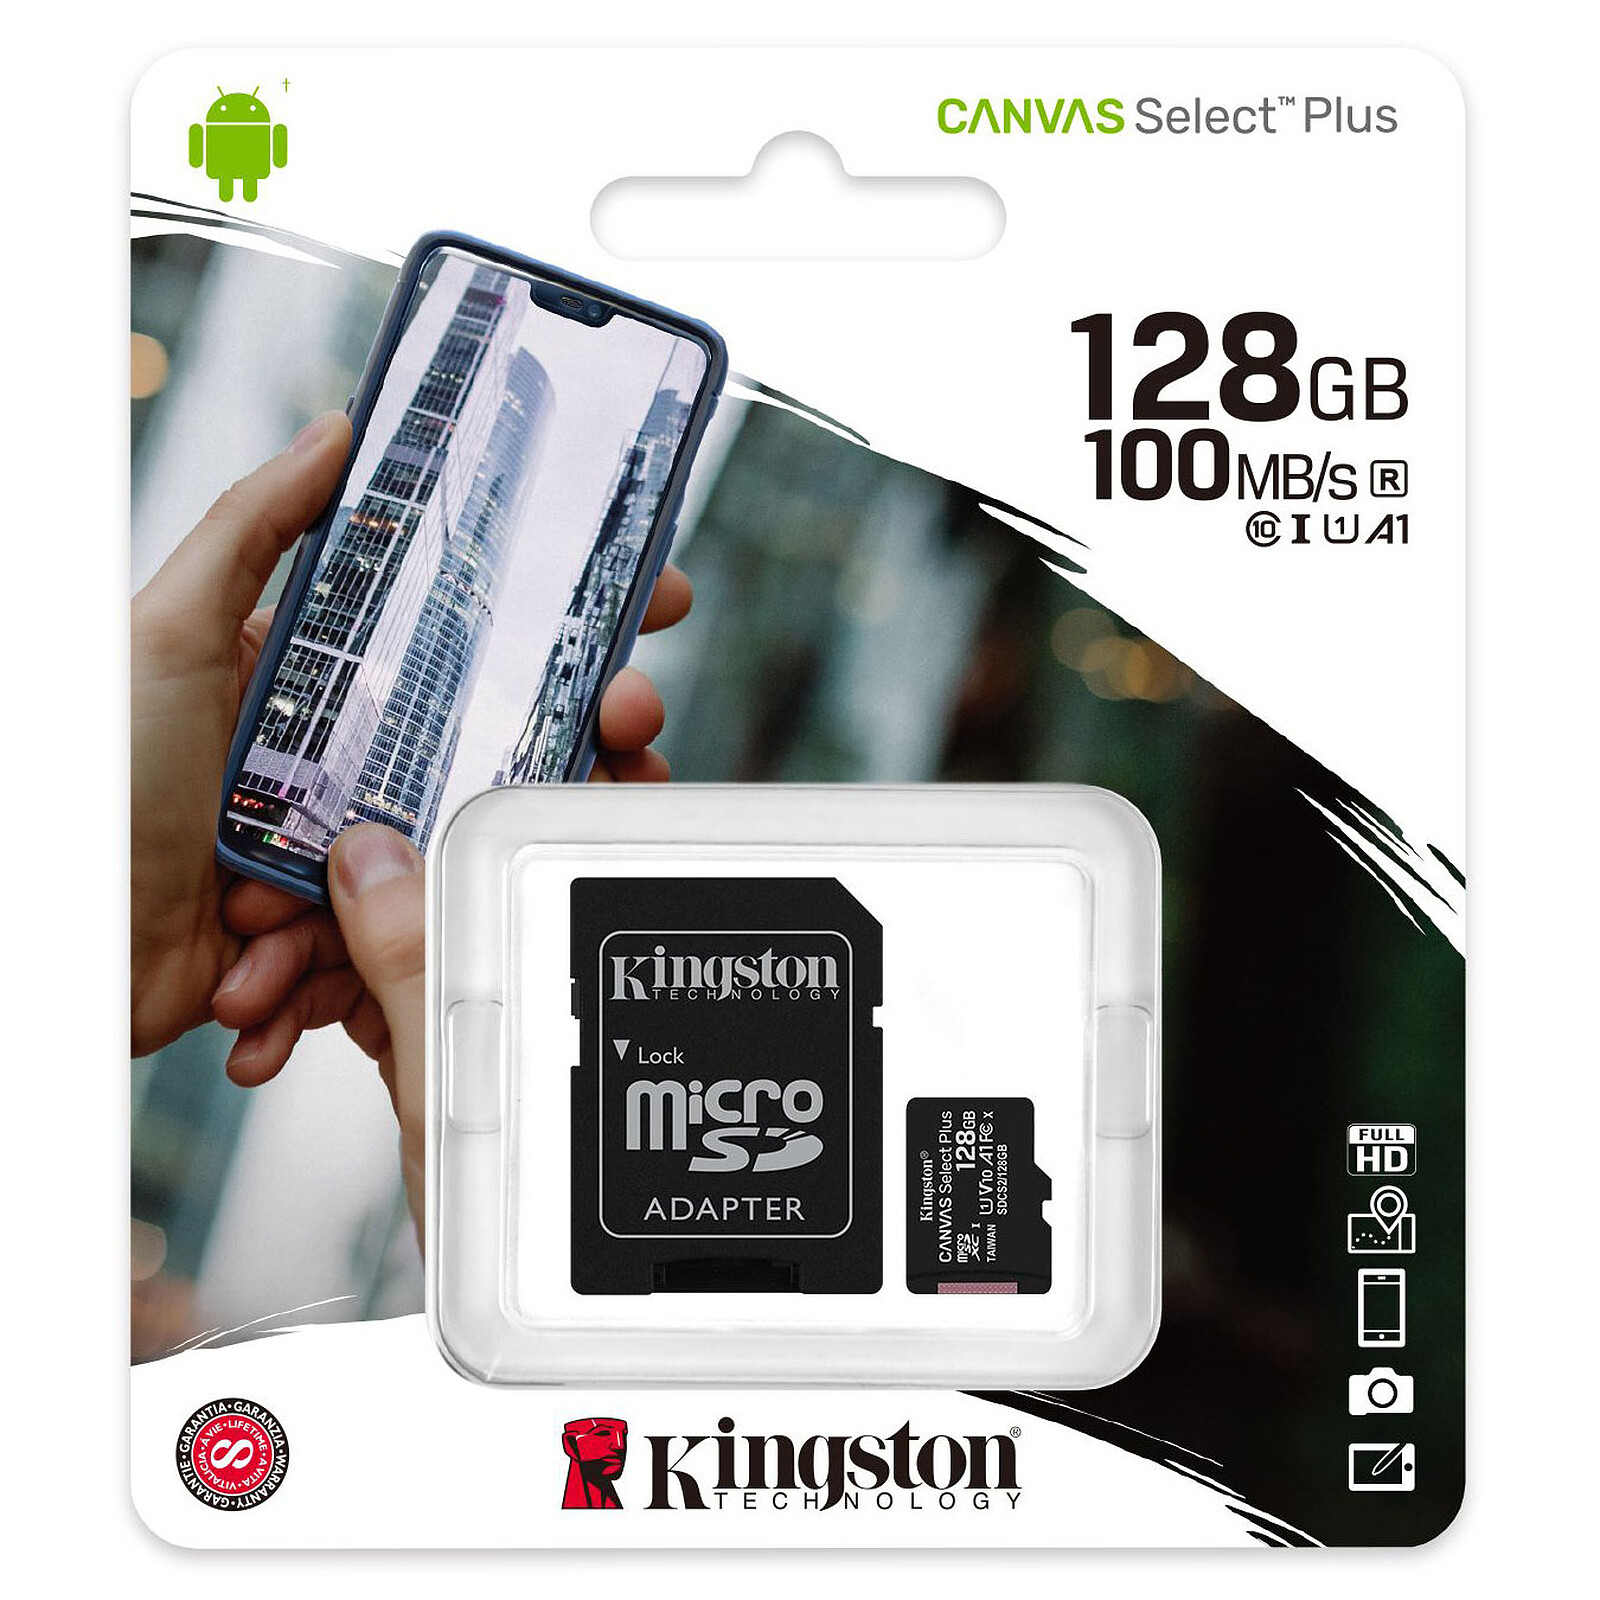 dorigine pour Samsung Galaxy core prime Kingston carte mémoire microsd sdhc 32 go classe 4